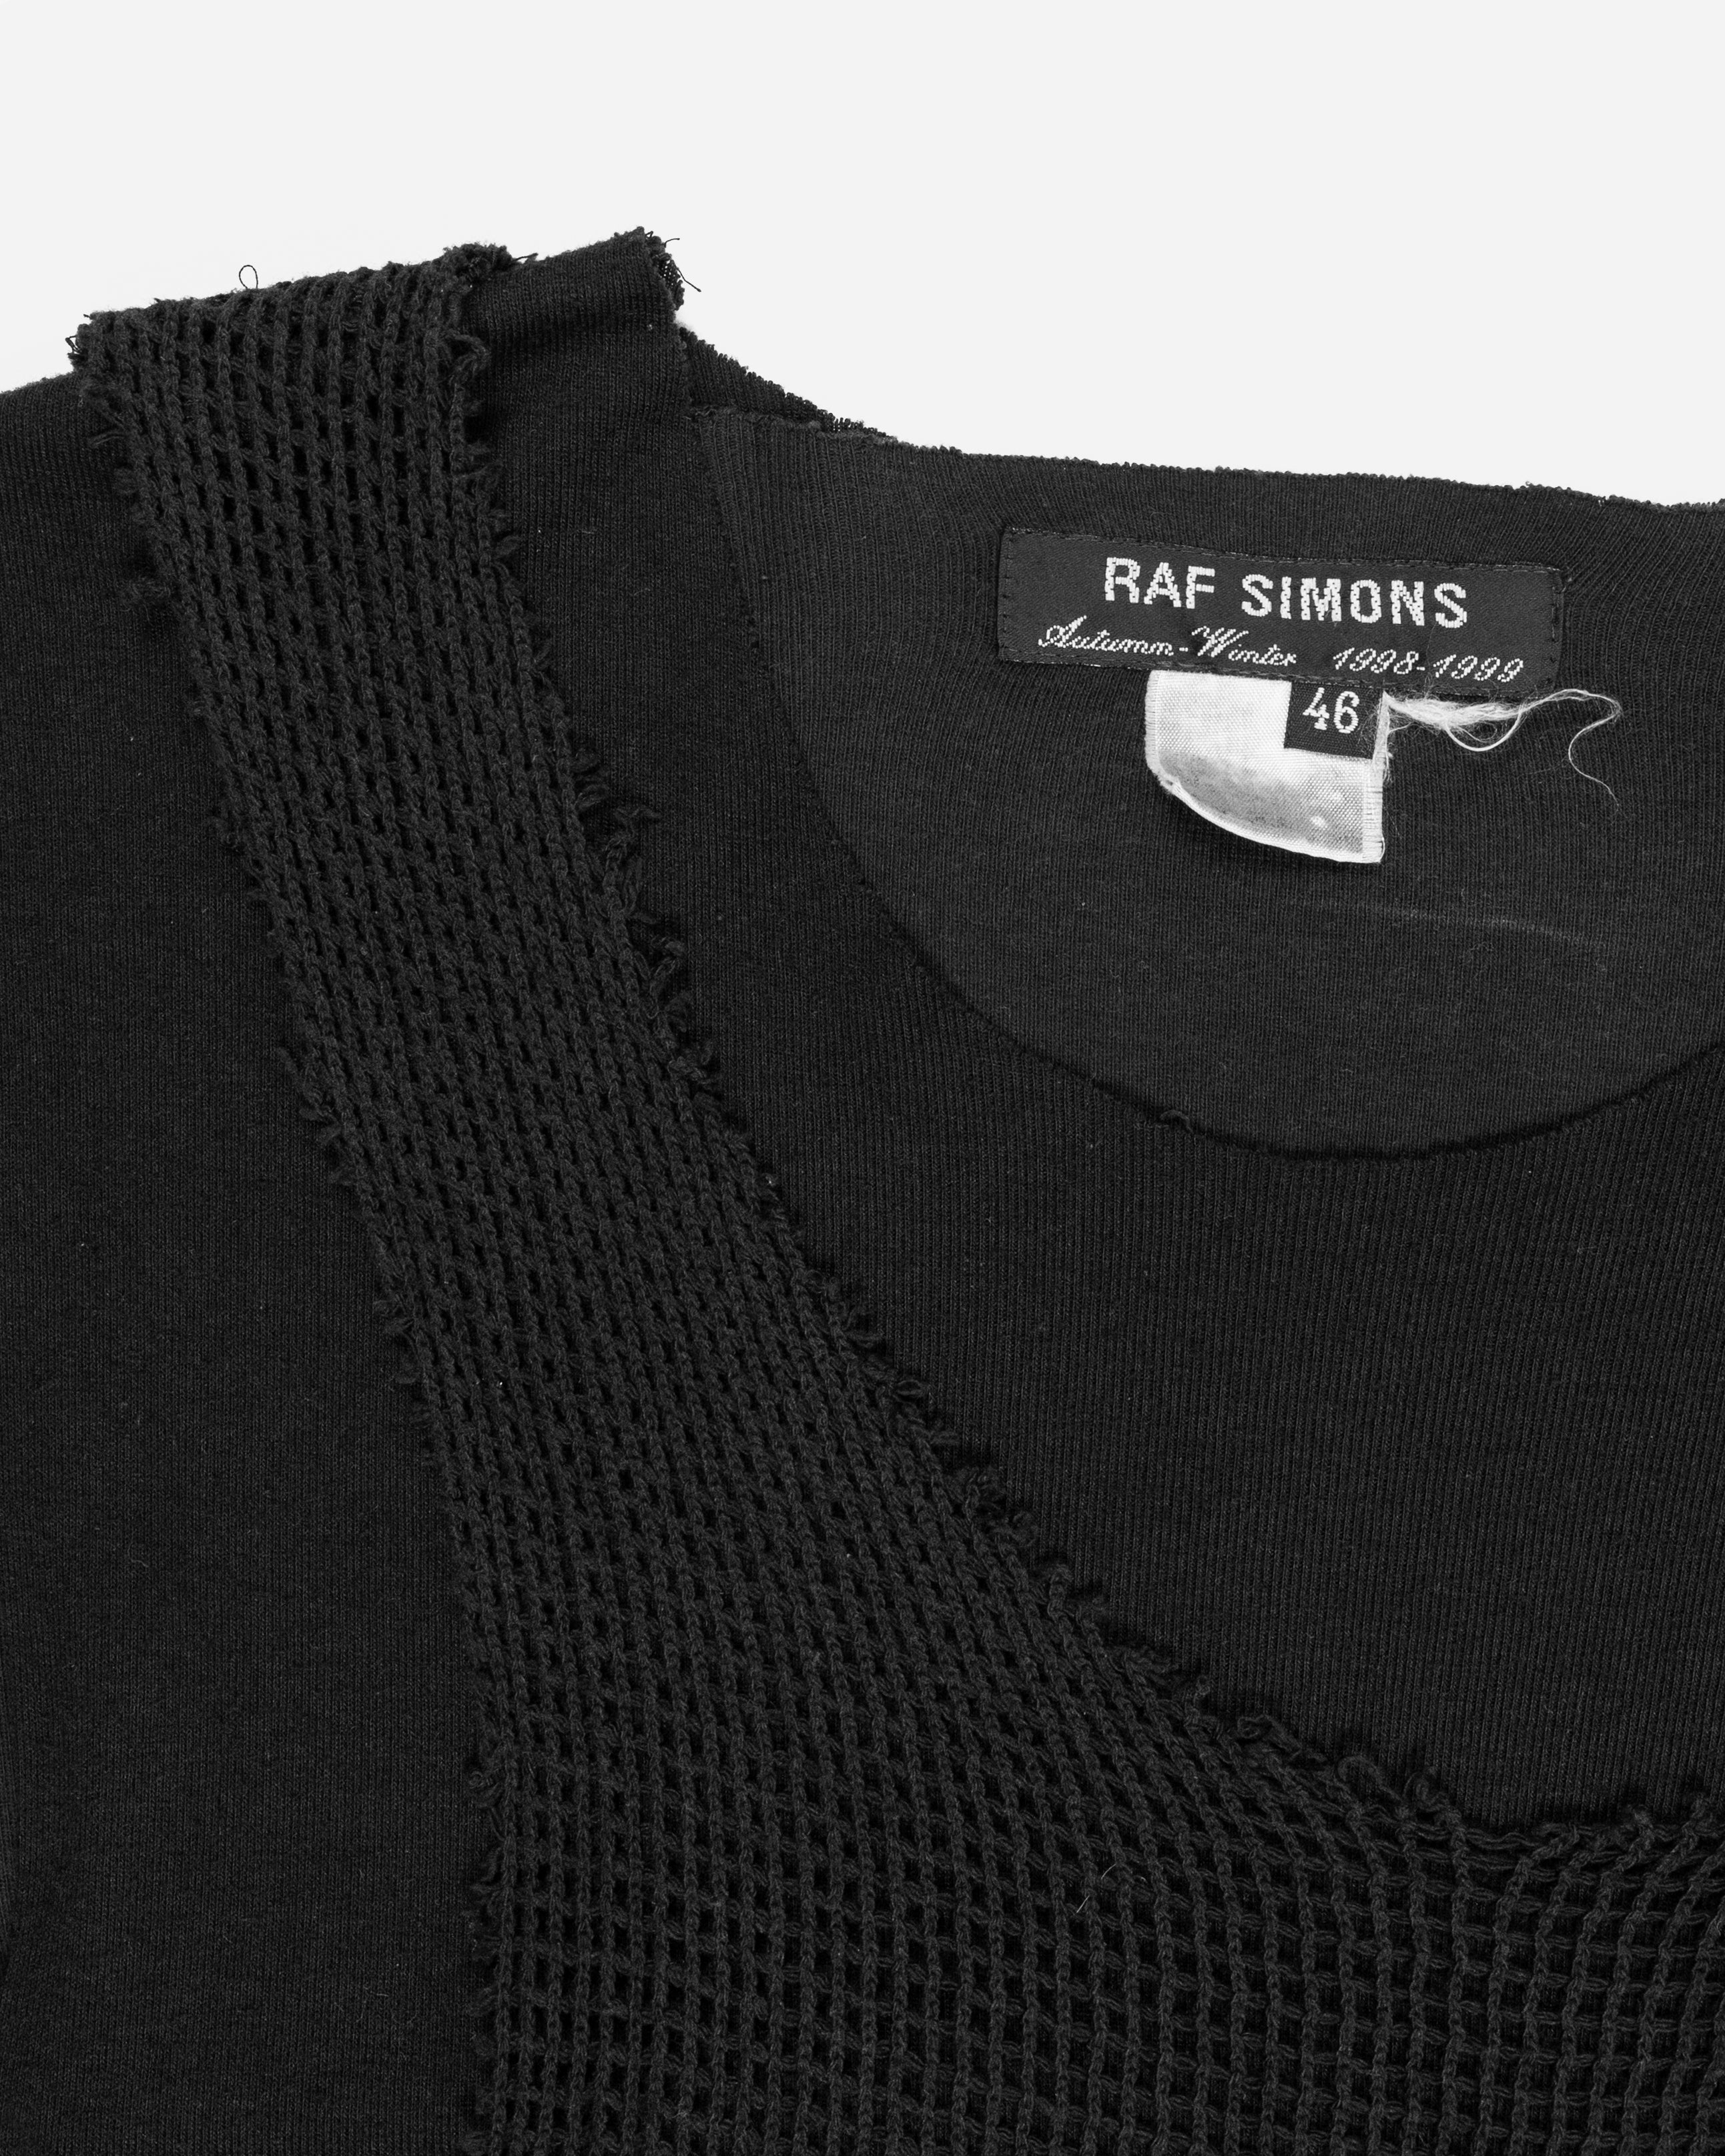 Raf Simons Triple Layered Long-Sleeve Top - AW98 “Radioactivity ...